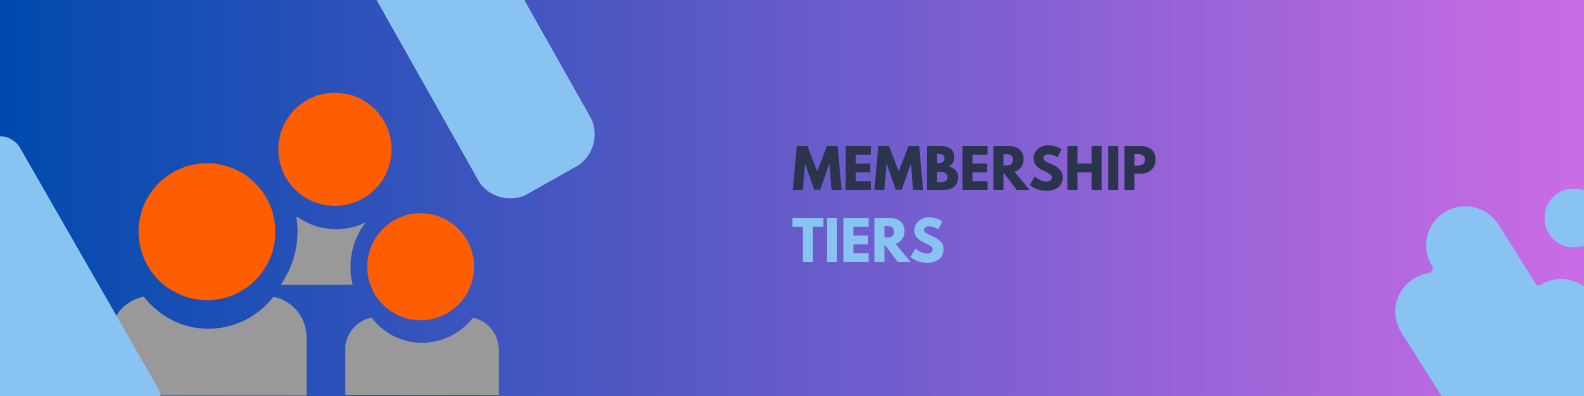 Membership Tiers